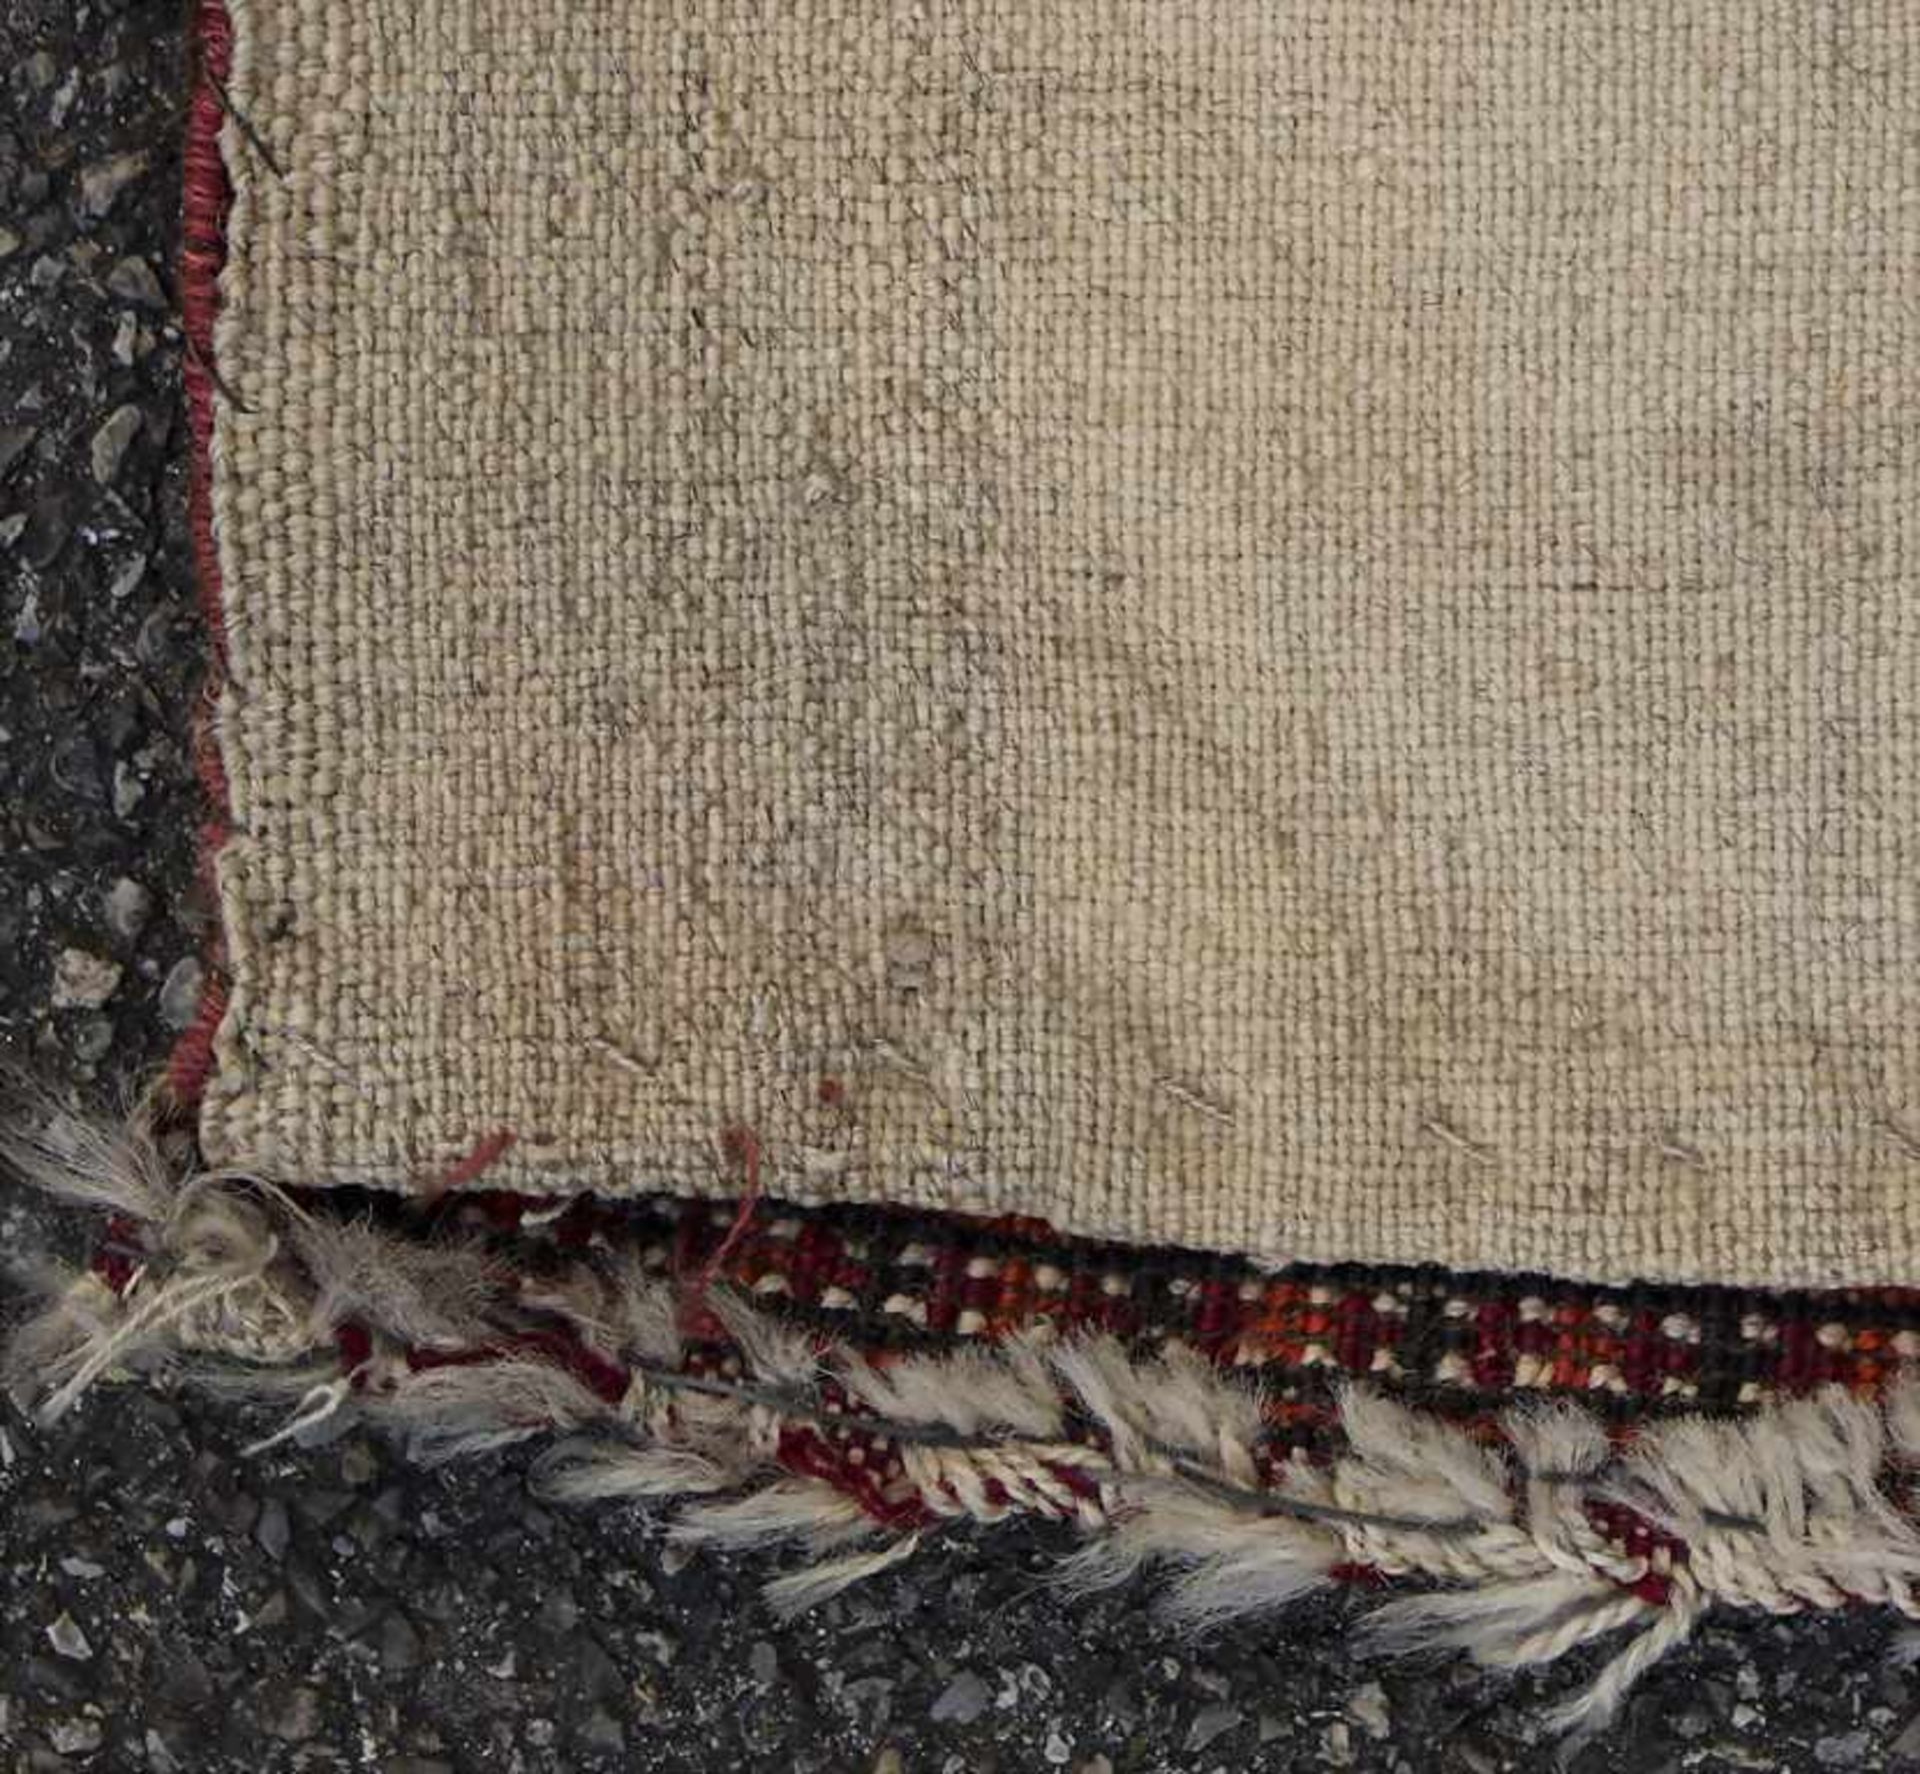 Orientteppich, Zelttasche / An oriental carpet, tentbag - Bild 4 aus 4